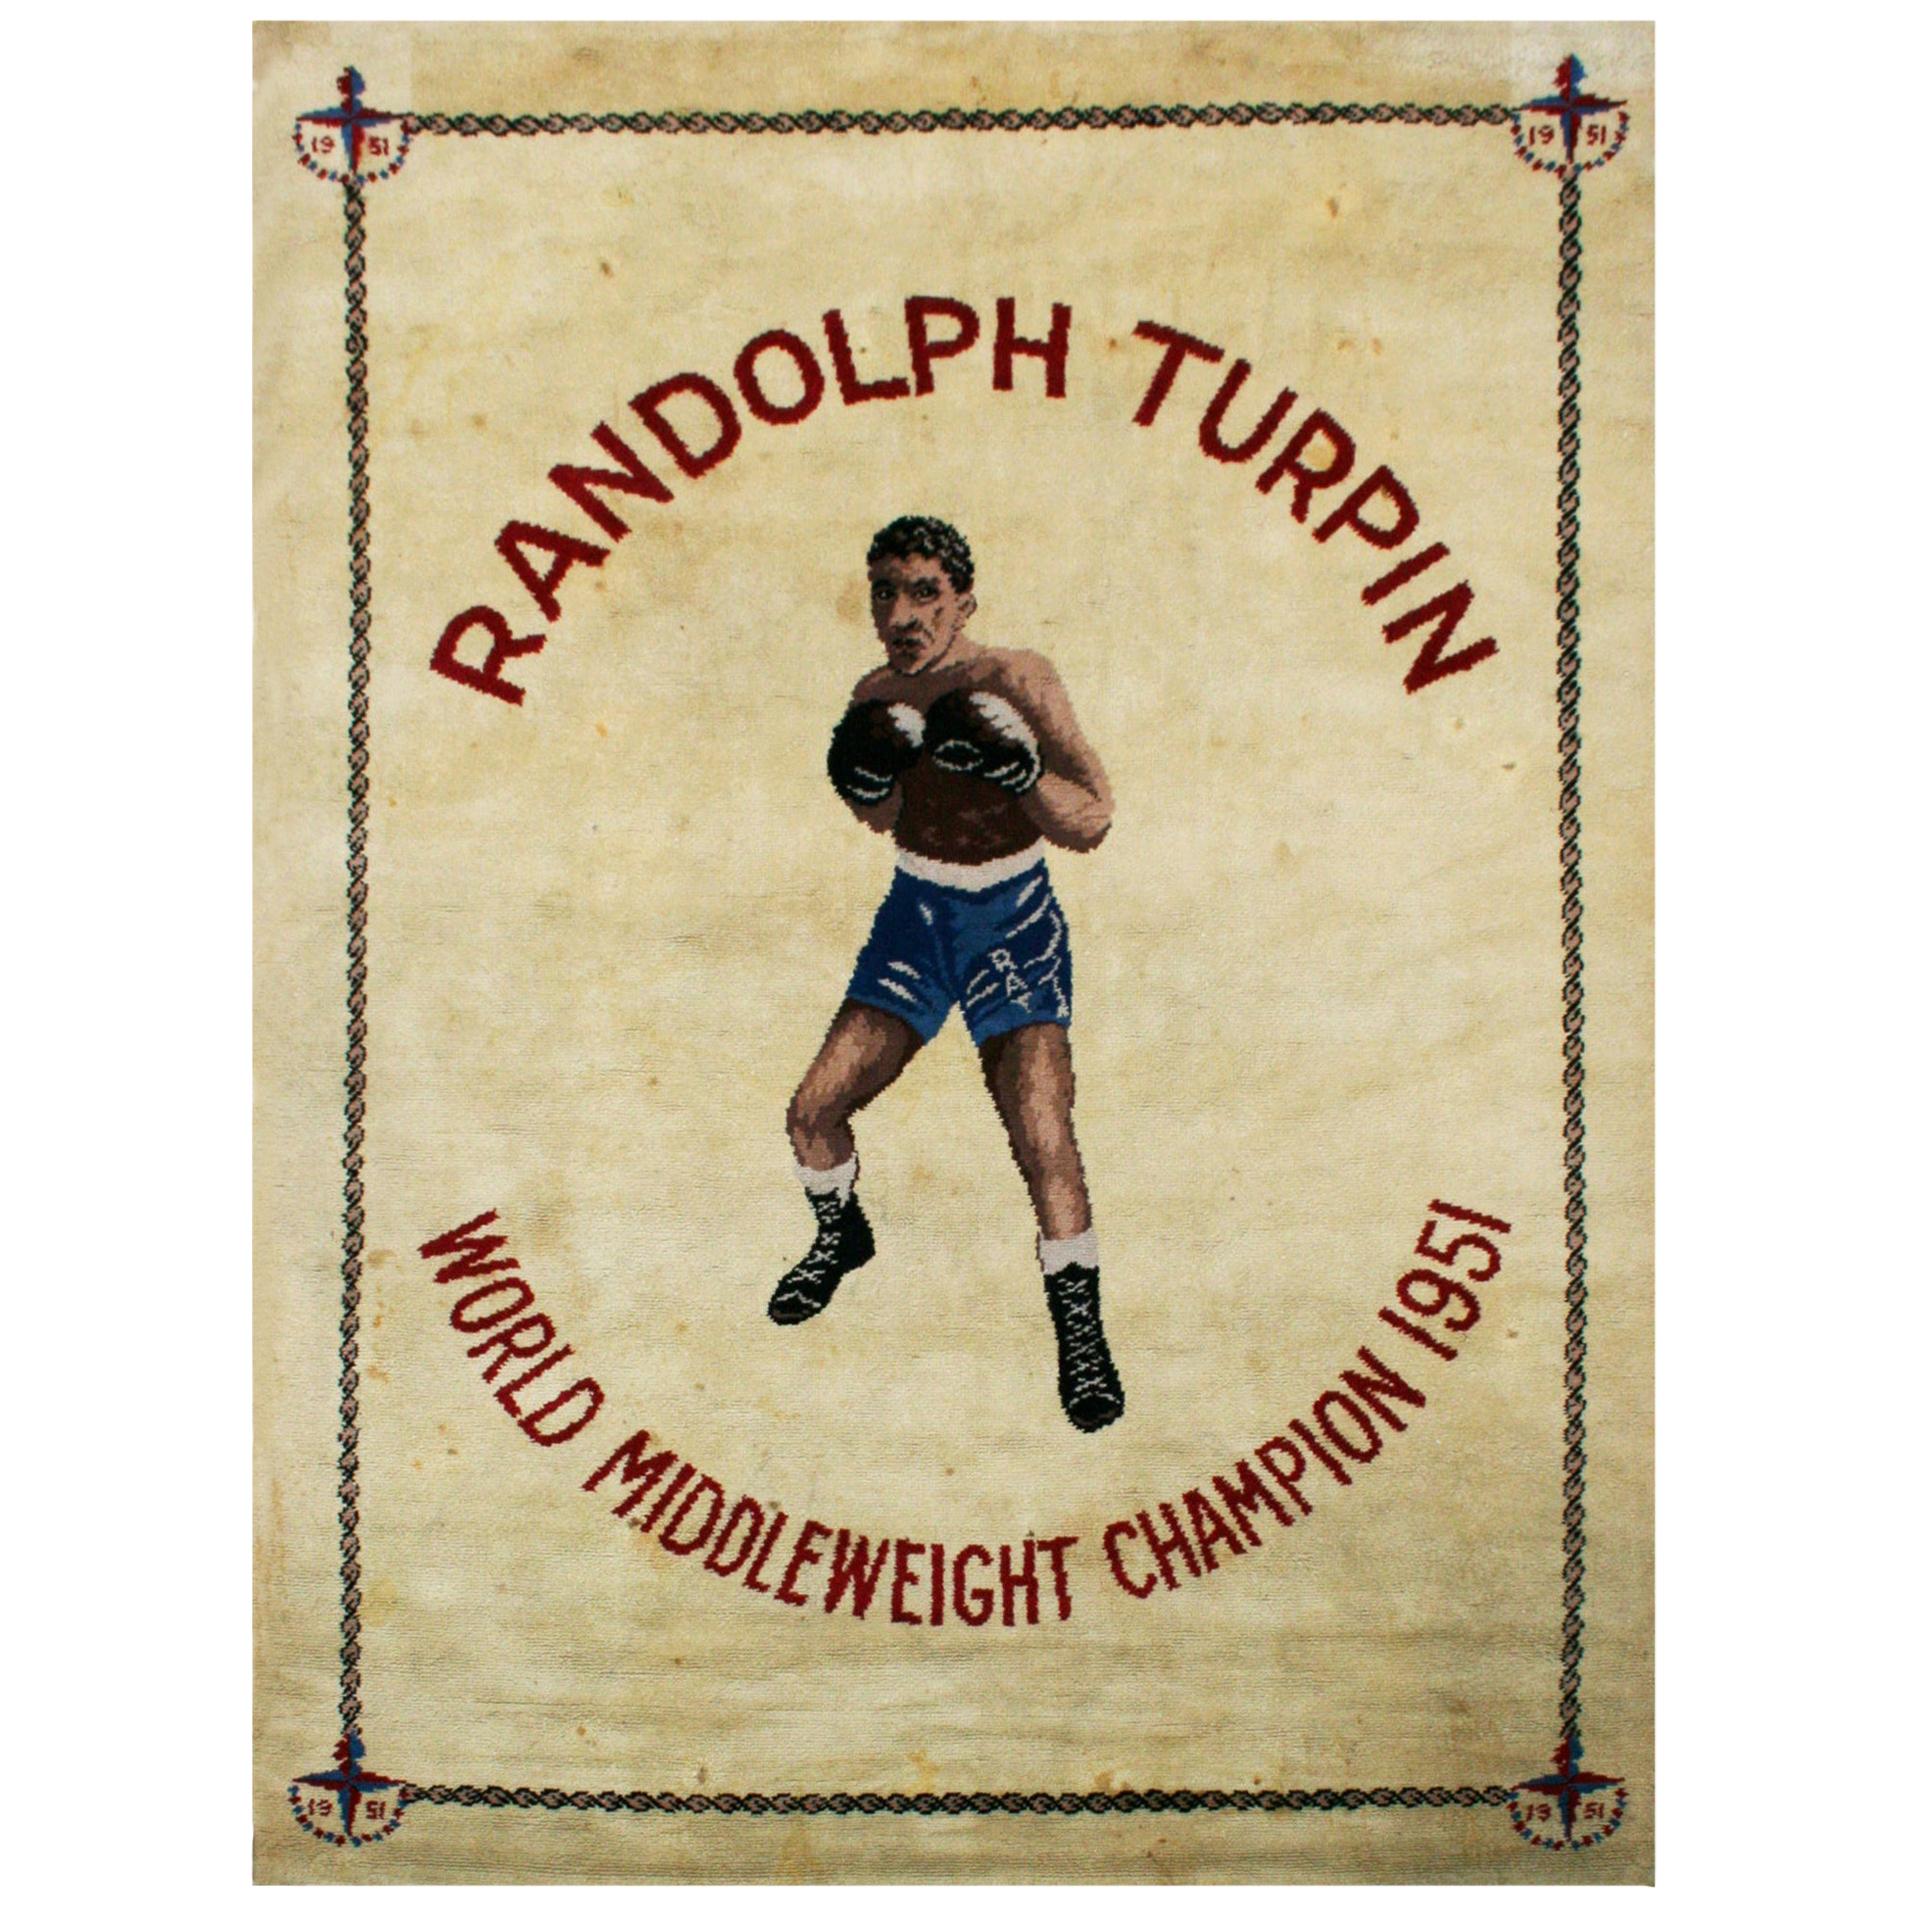 Tapis de boxe Randolph Turpin, champion moyenweight du monde, Sugar Ray